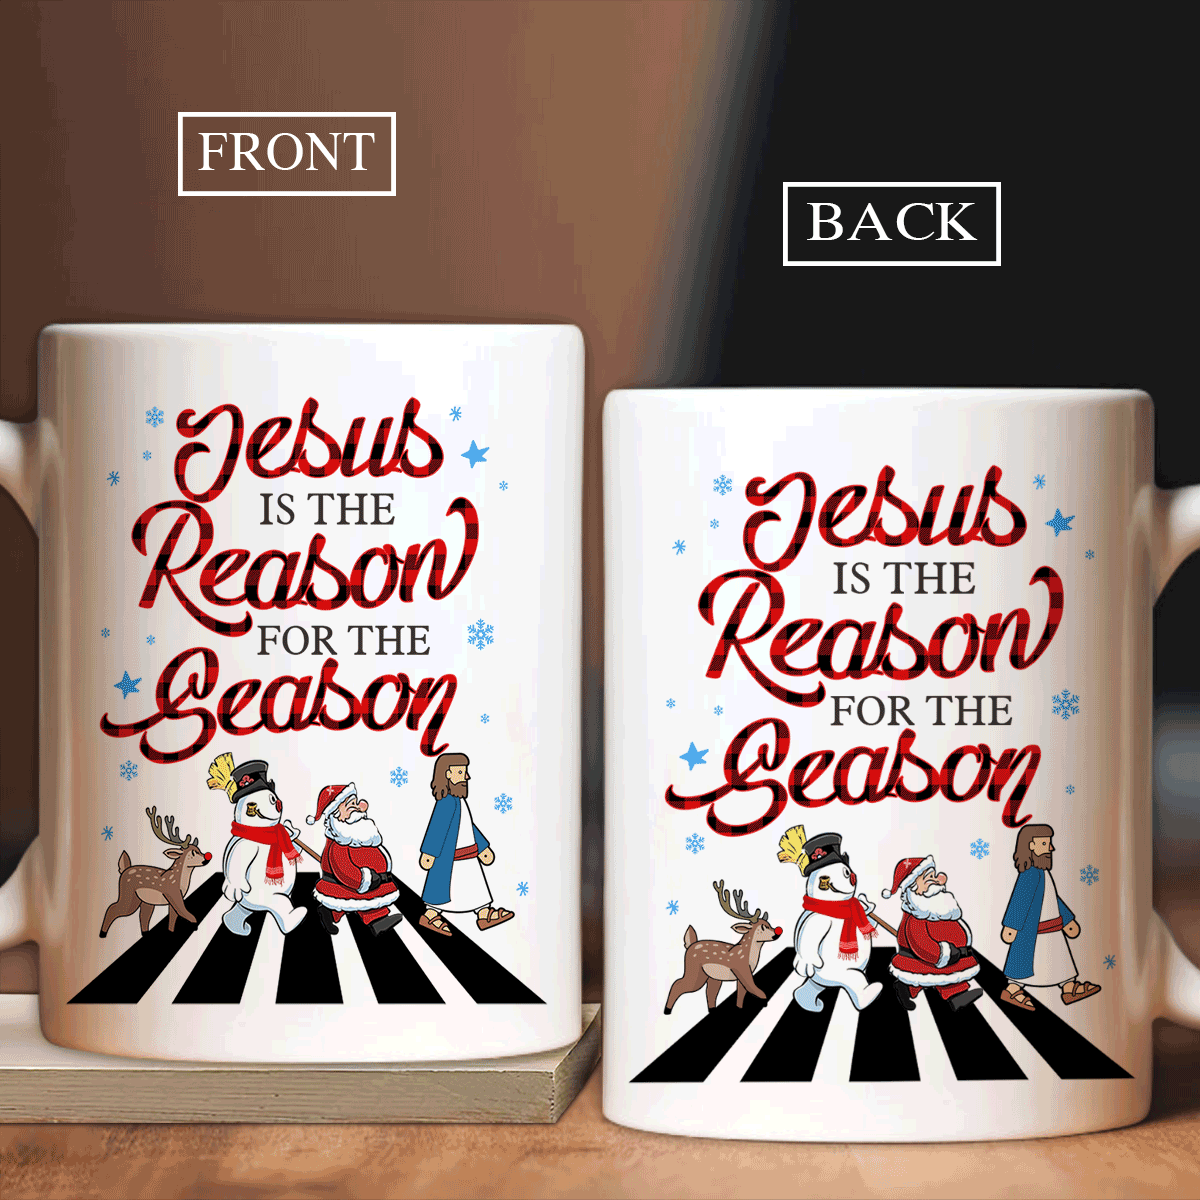 Jesus White Mug, Christian Mug Gift, Religious White Mug, Faith Mug - Santa Claus, Snowman, Red Nose Reindeer, Jesus Is The Reason For The Season